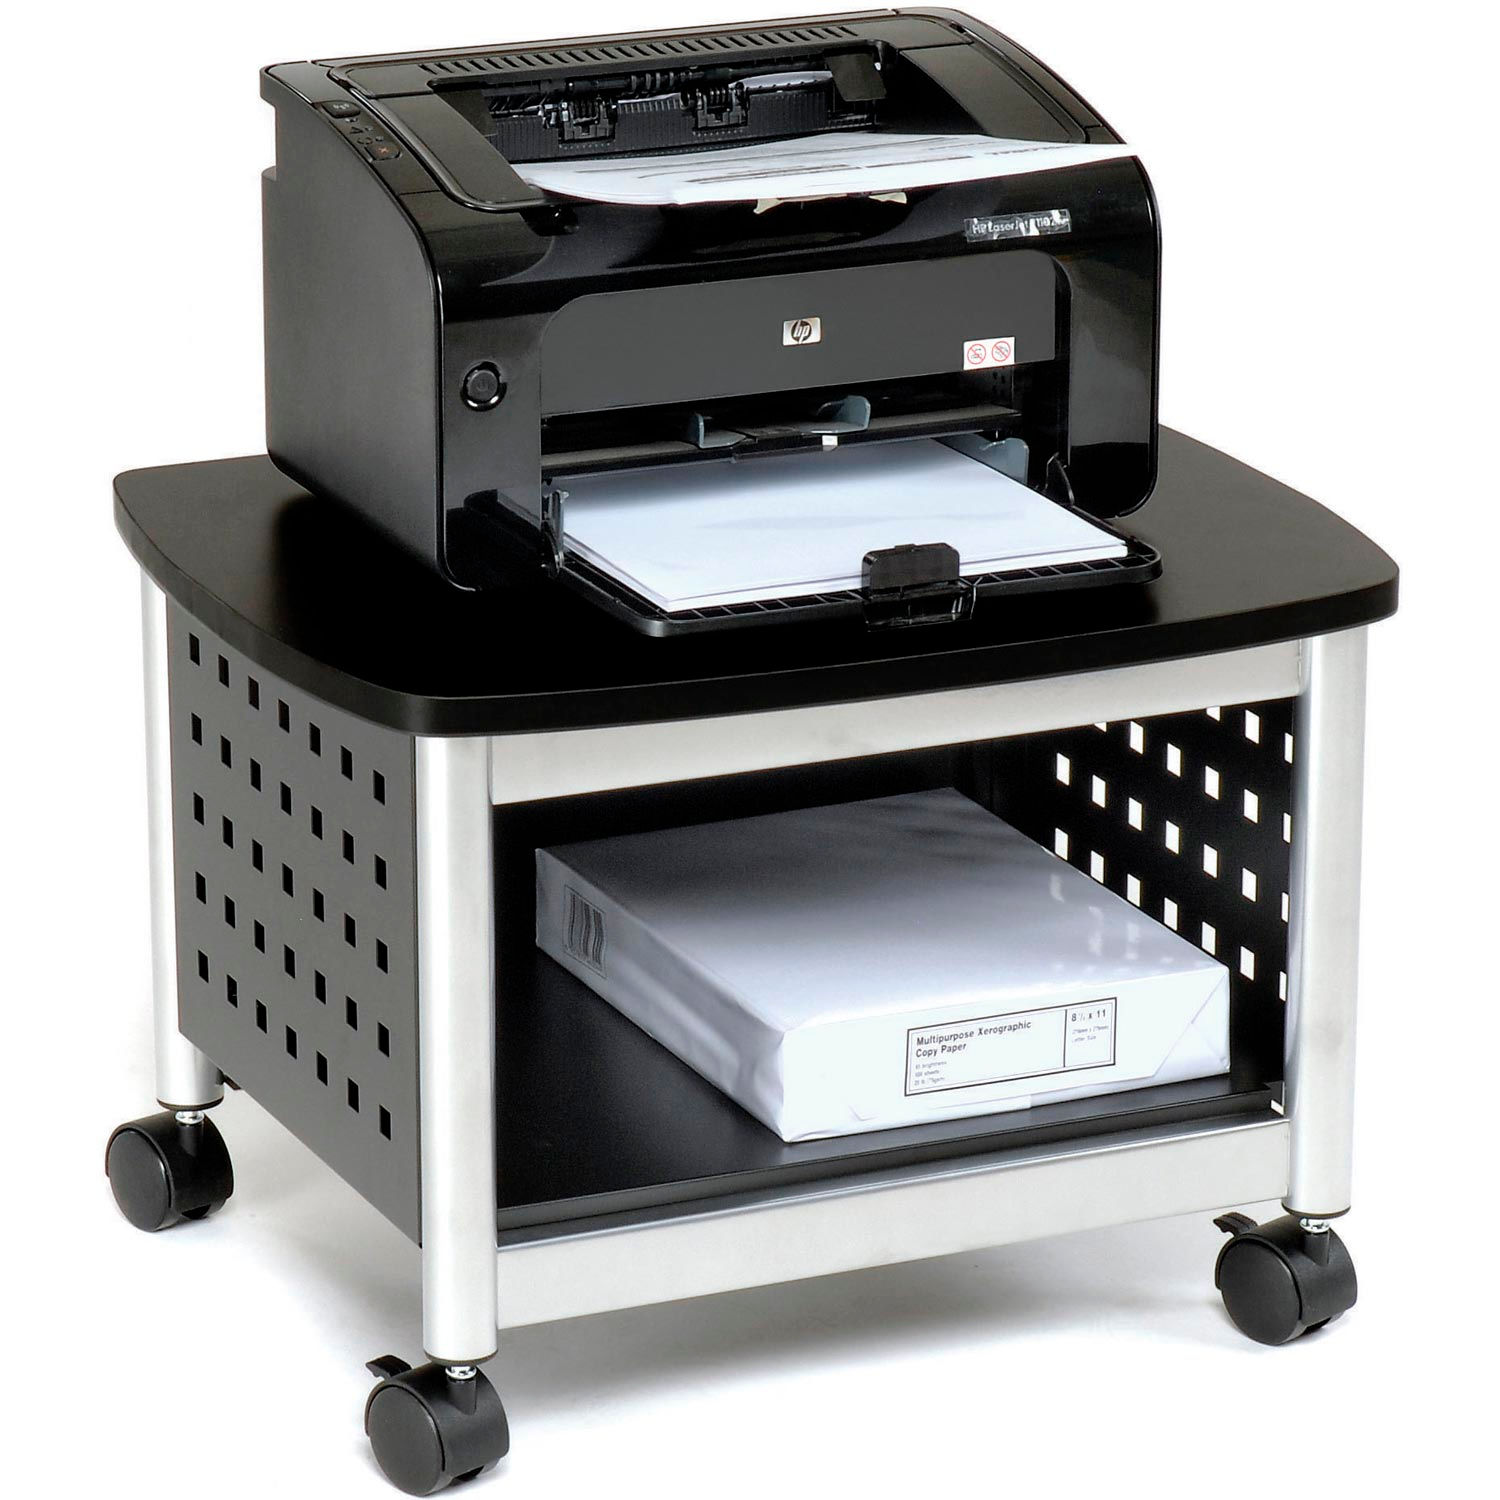 Тумба под принтер/сканер DL-hg004/White. BRAUBERG 510190 подставка под принтер. Столик под принтер. Подставка под принтер на колесиках. Компакт принтер